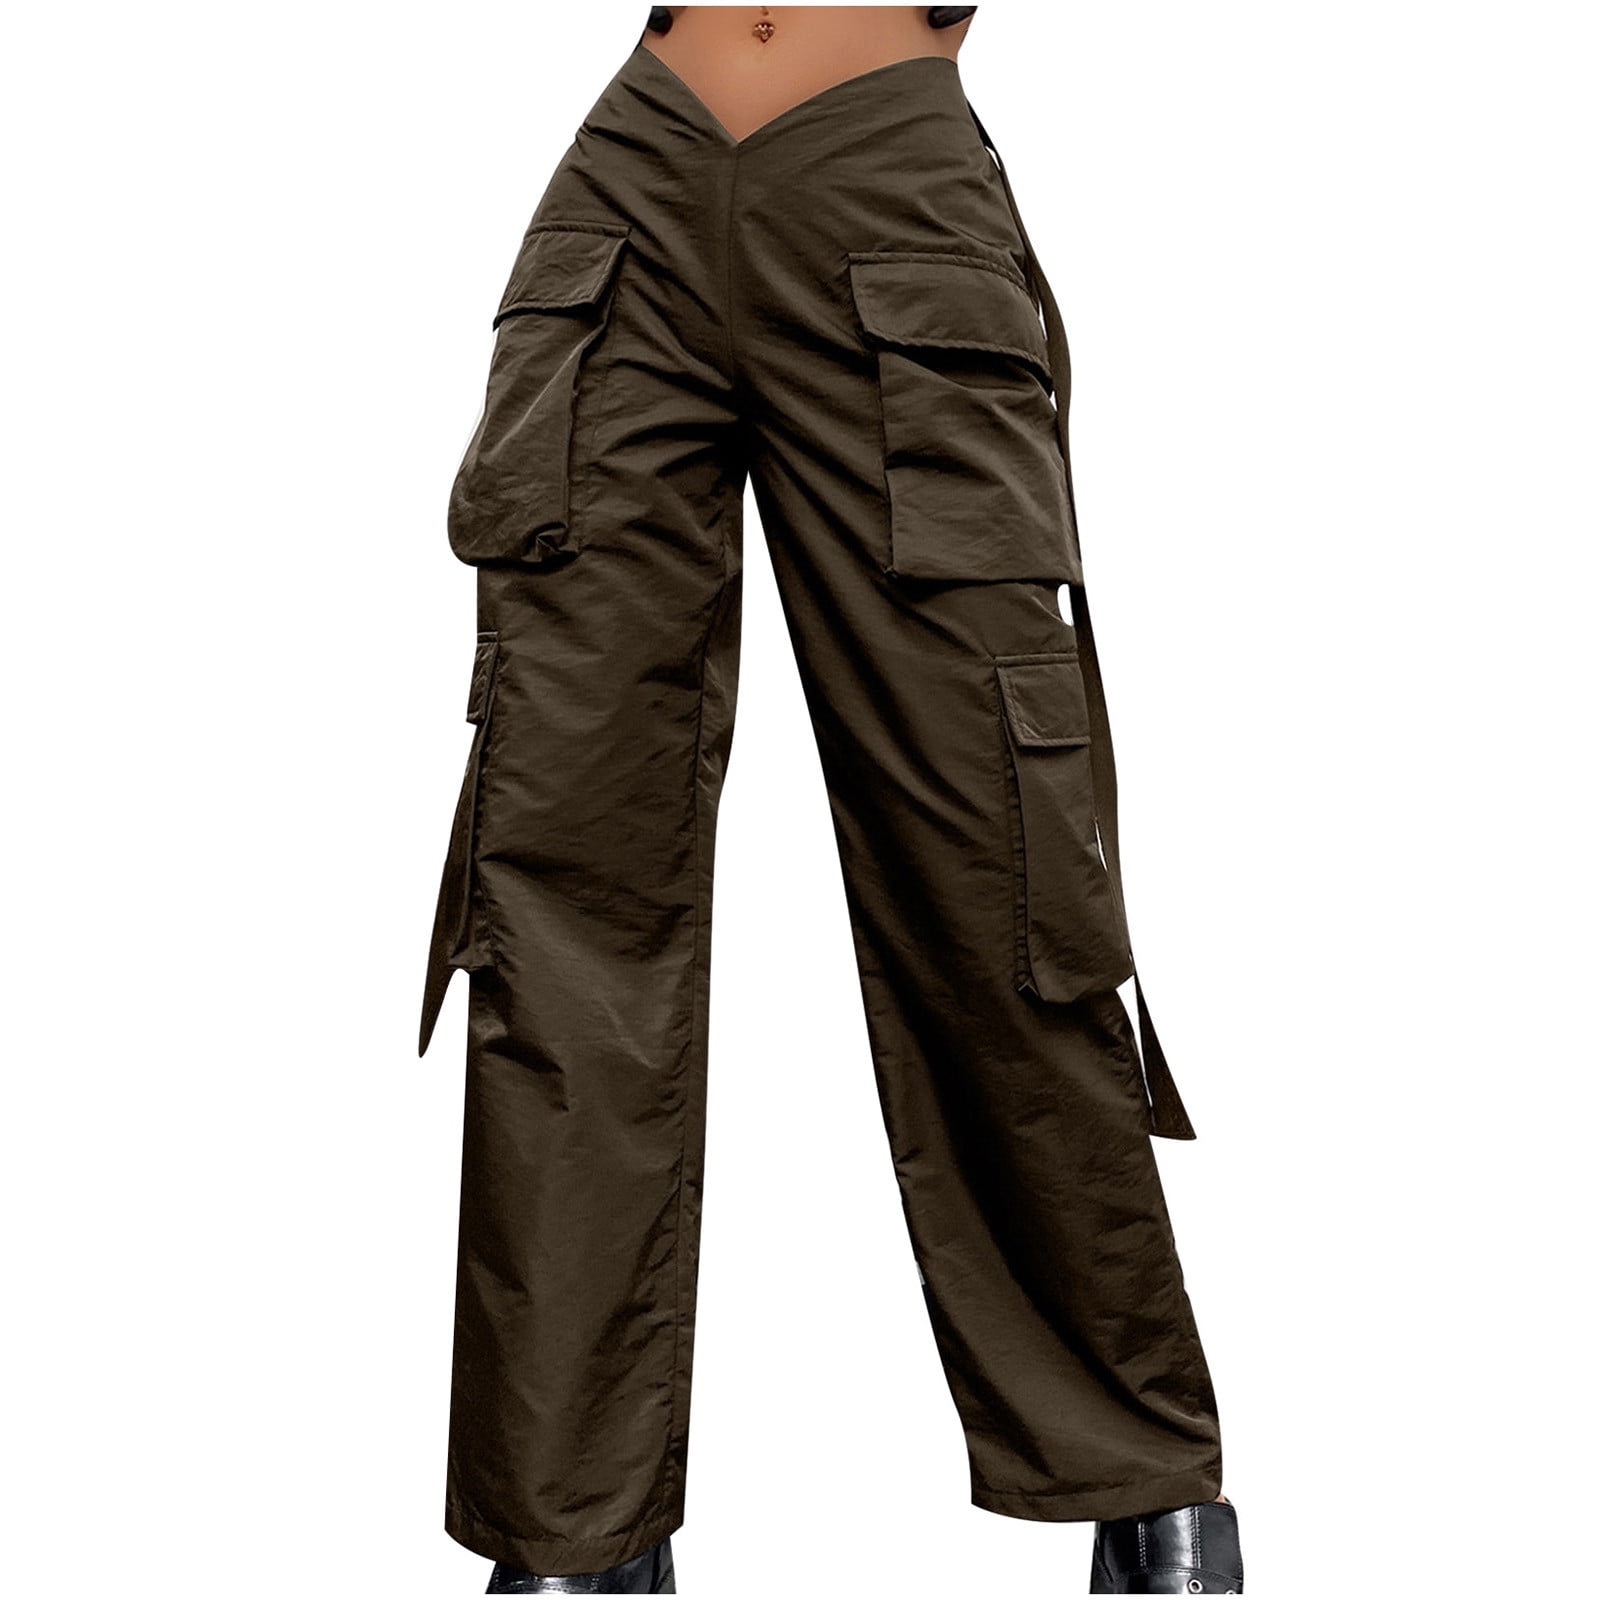 FAIWAD Cargo Pants for Women High Waist Elastic Butt Lifting Joggers  Sweatpants Lightweight Hiking Lounge Pants (Small, Army Green) 